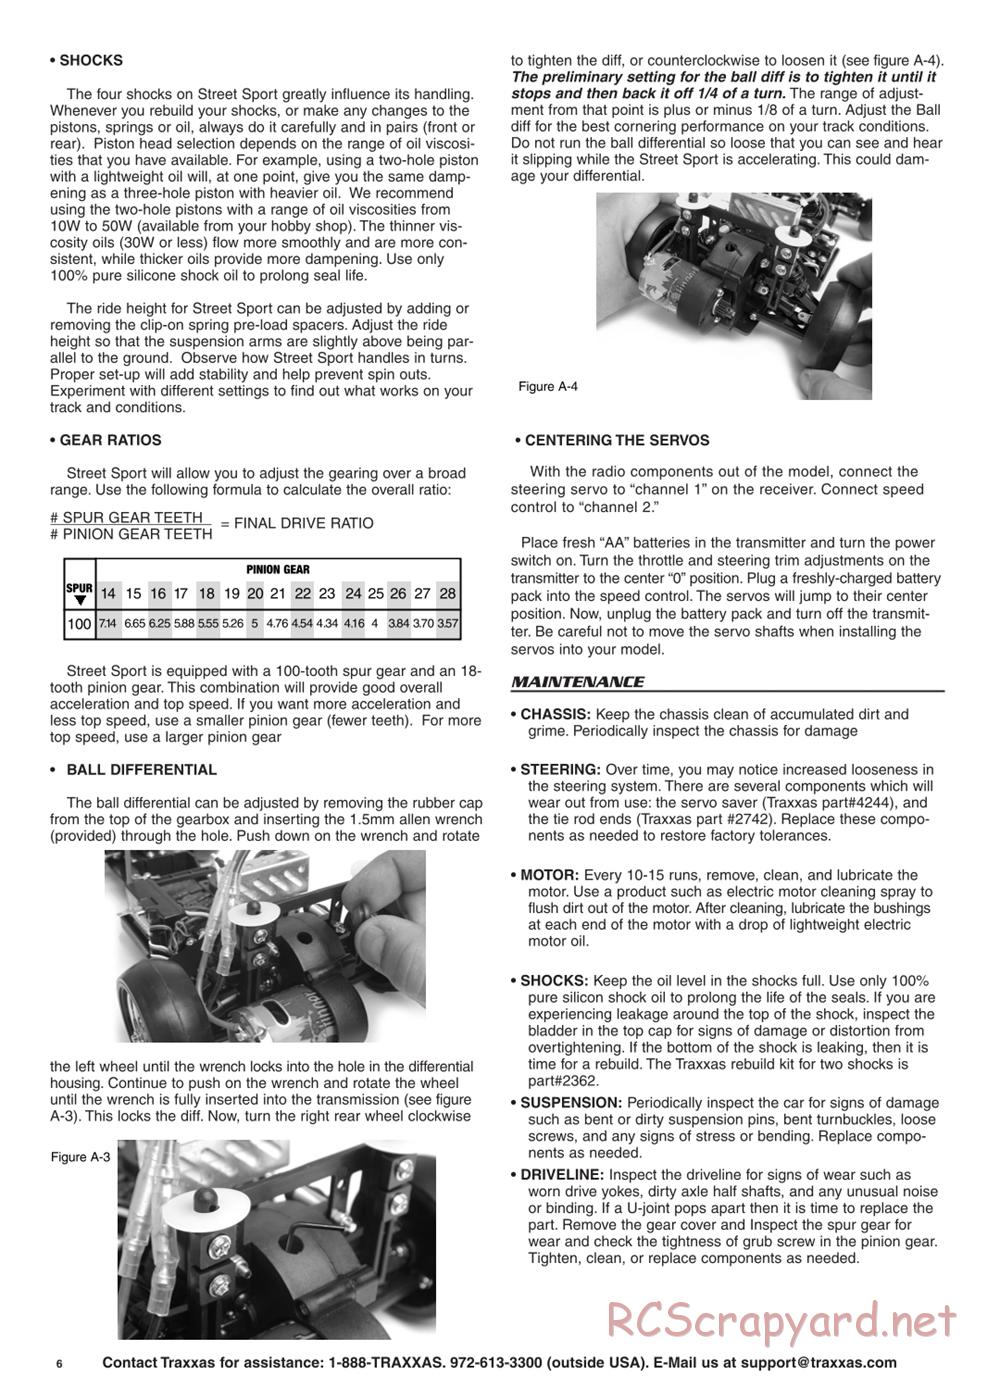 Traxxas - Street Sport - Manual - Page 6